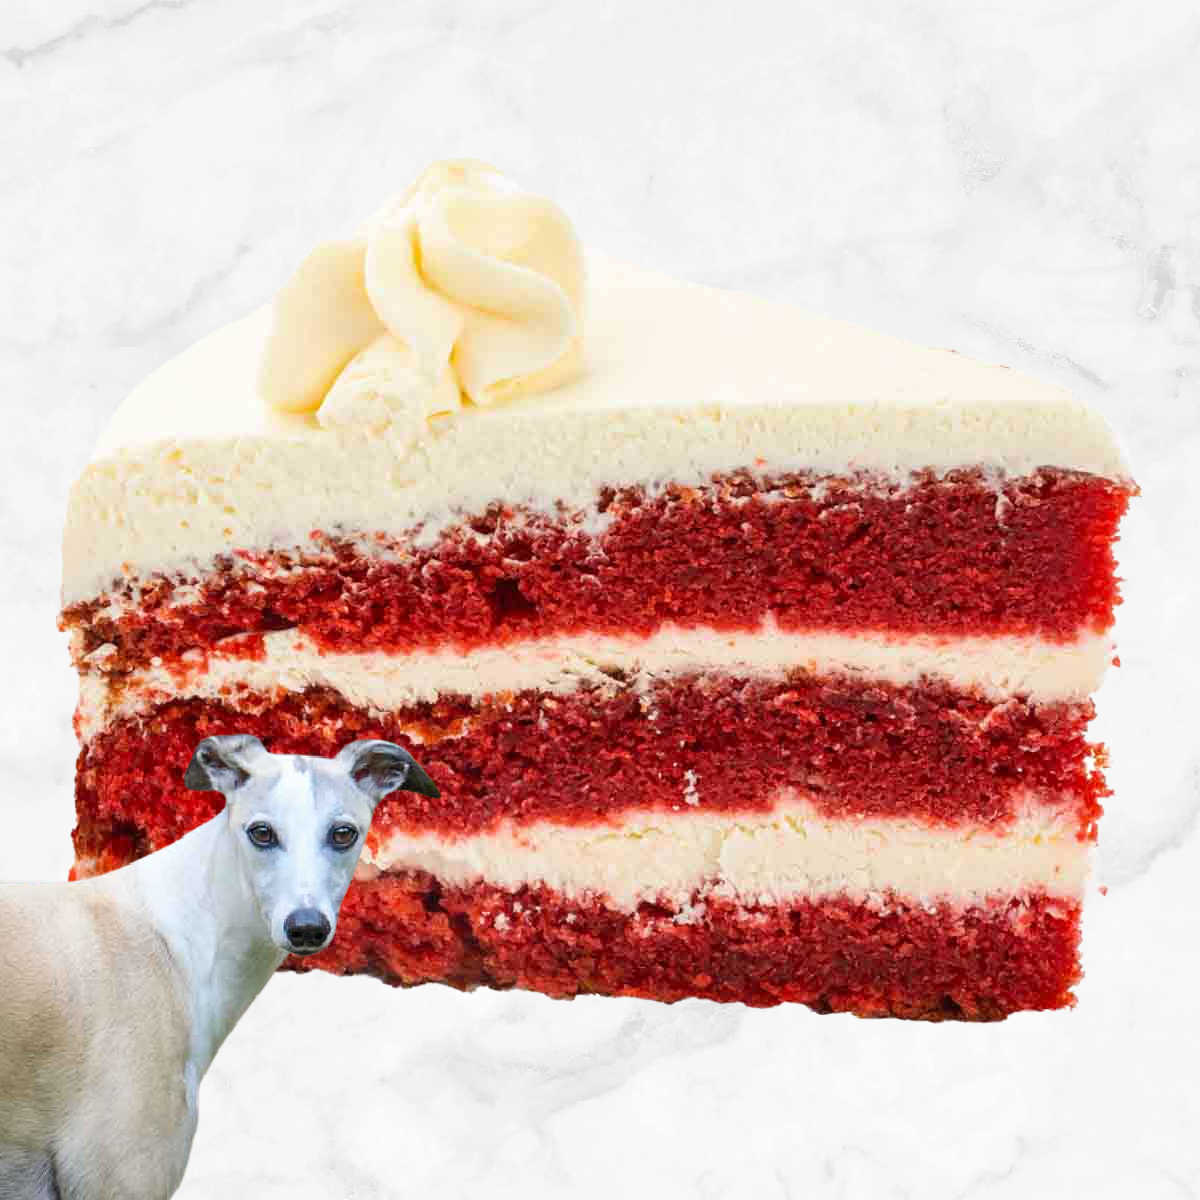 Dog in front of a red velvet cake slice.